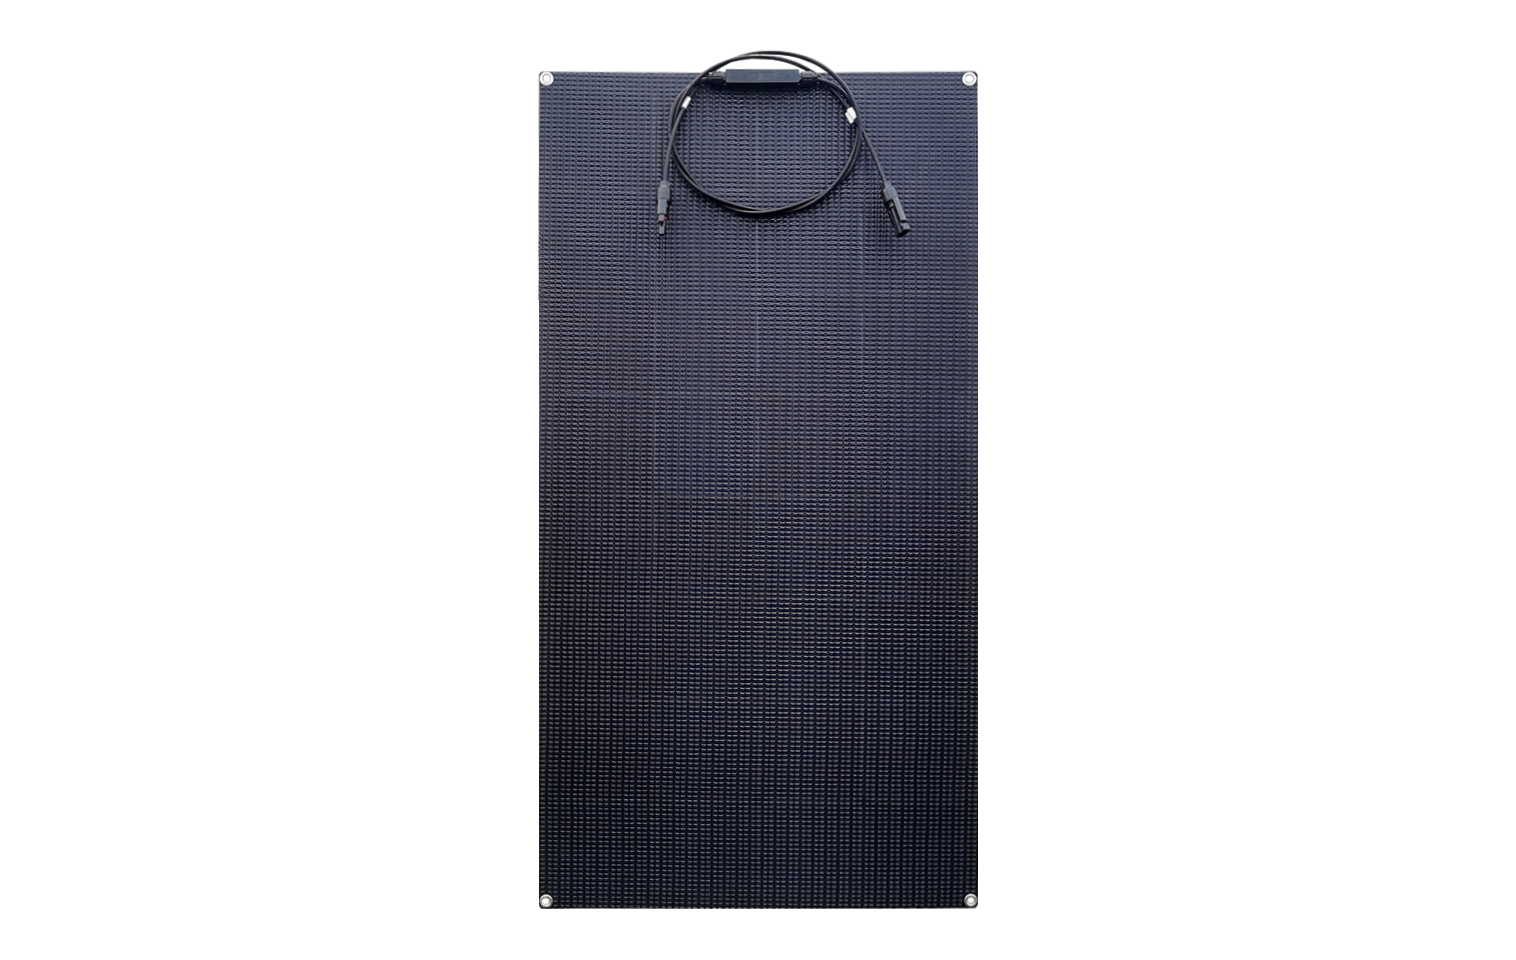 Panel solar flexible 120W (1290 x 520 x 3)